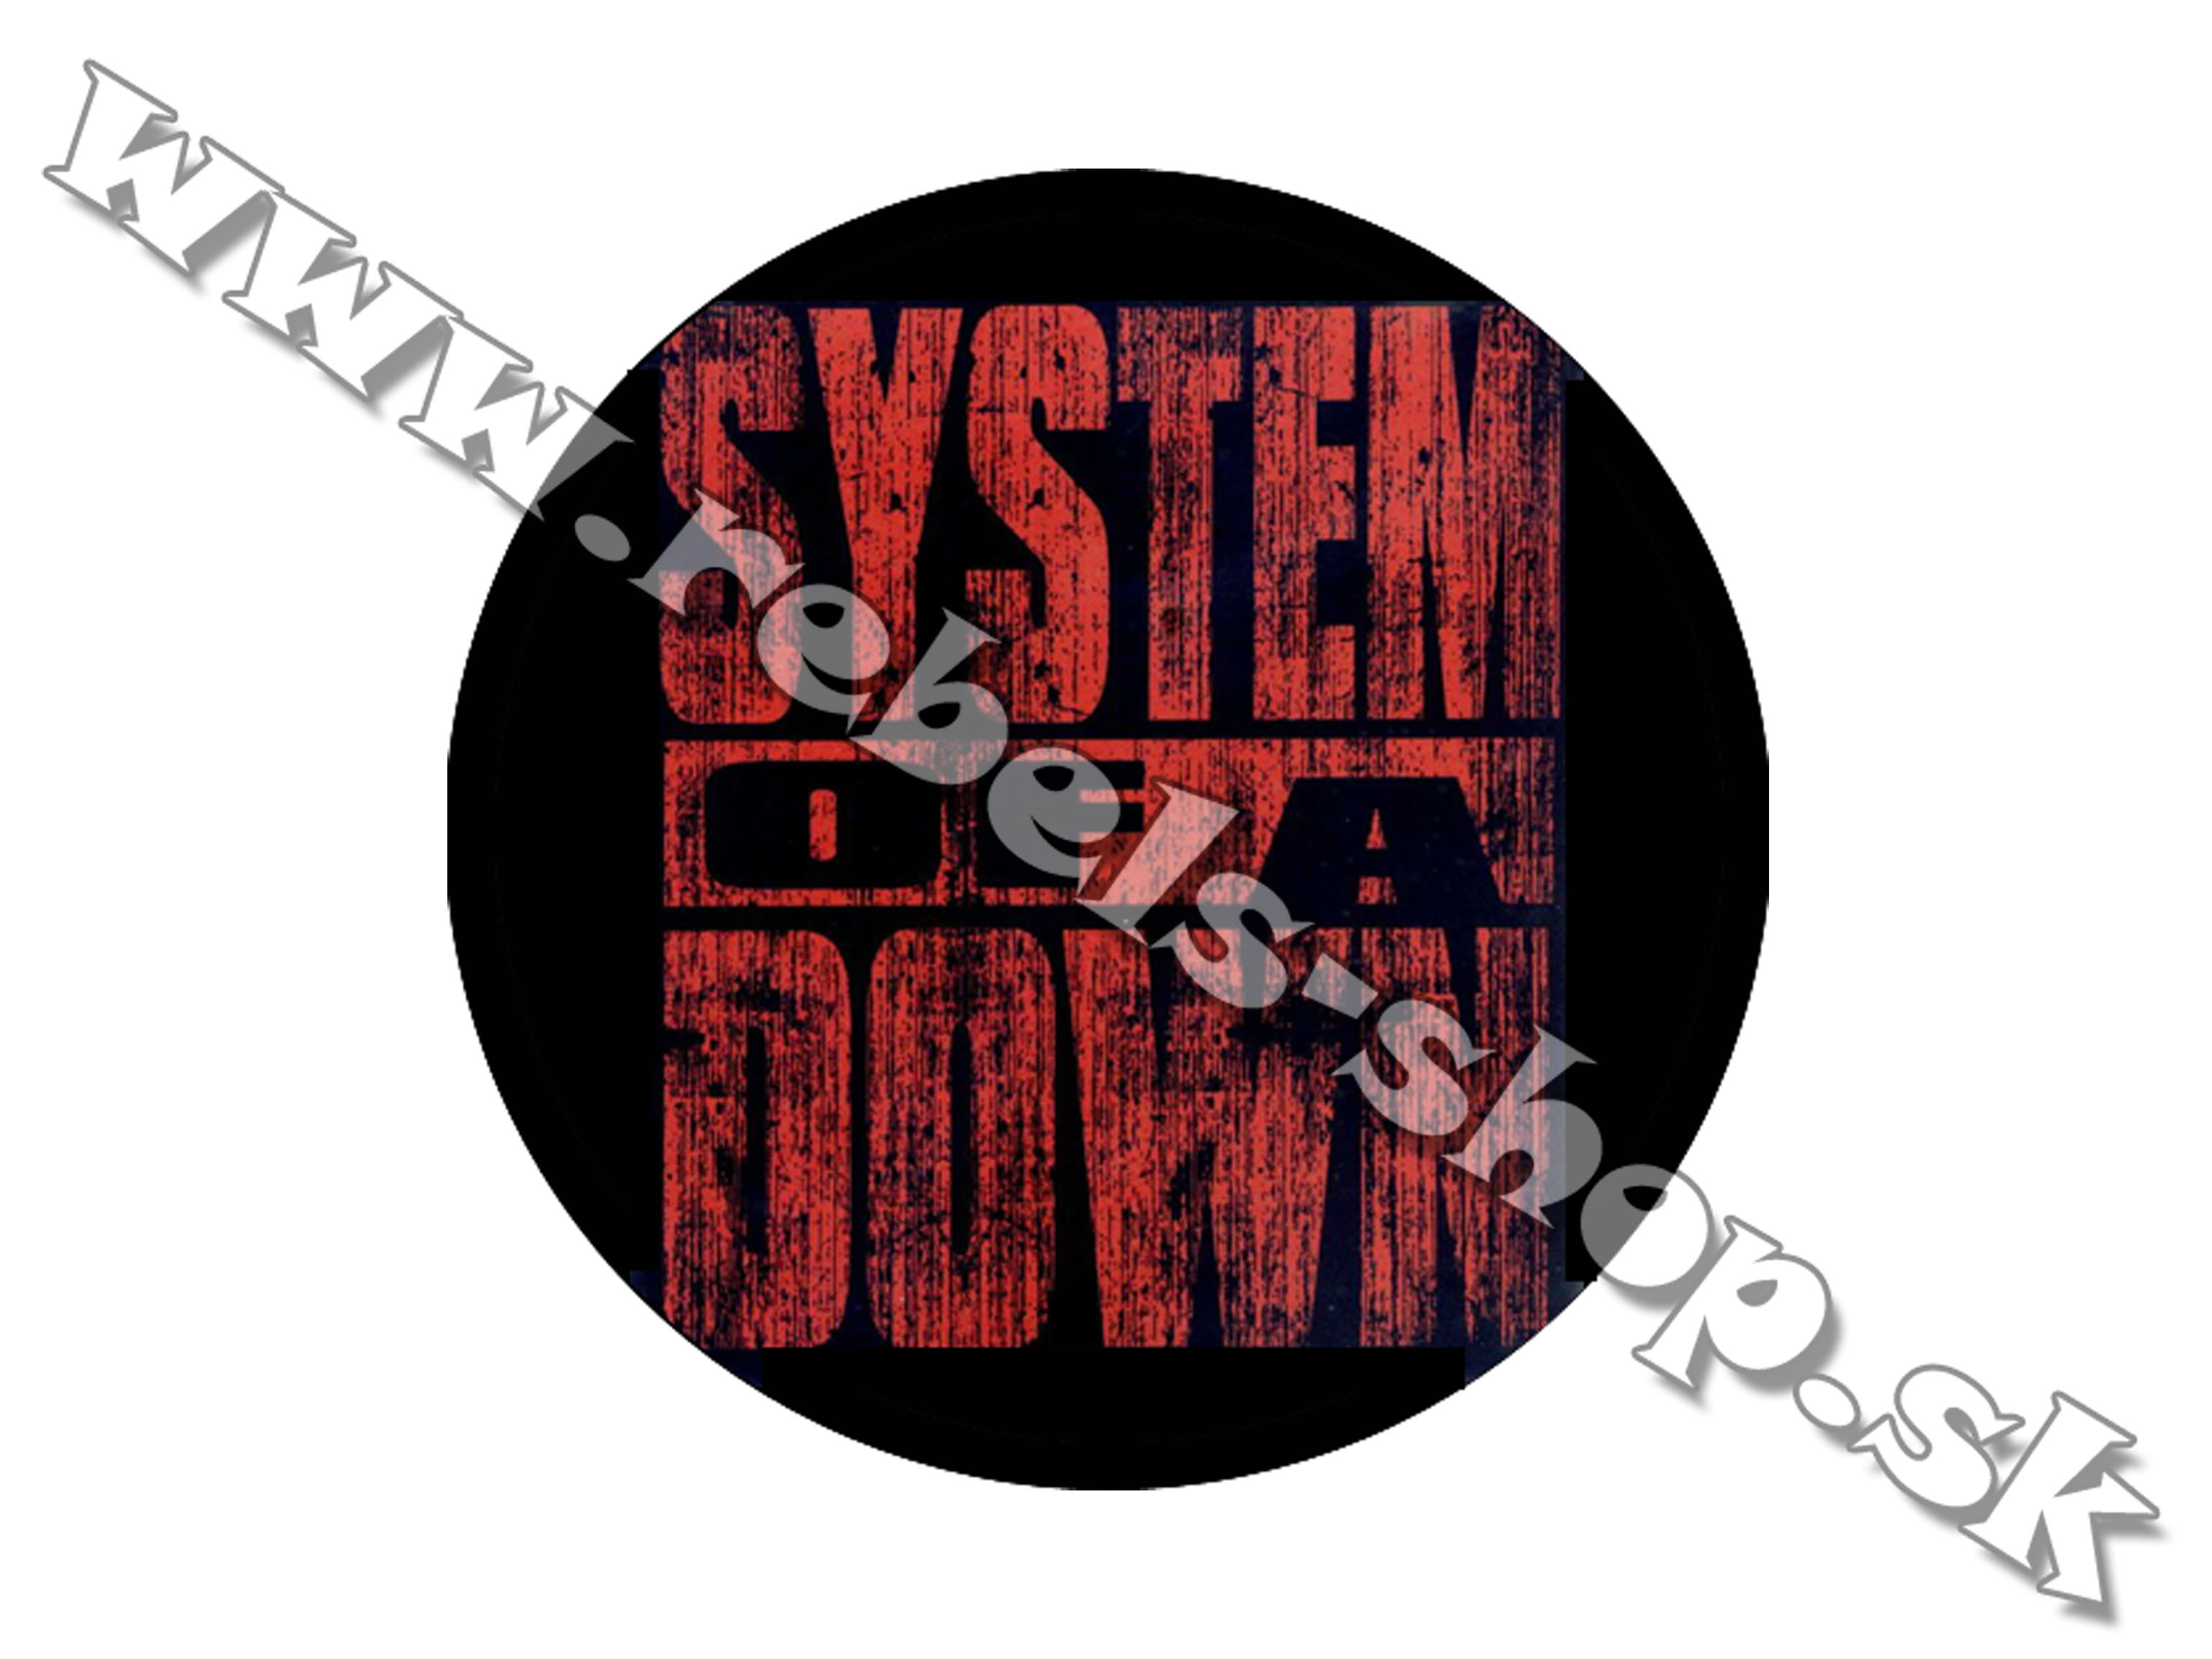 Odznak "System of a Down"